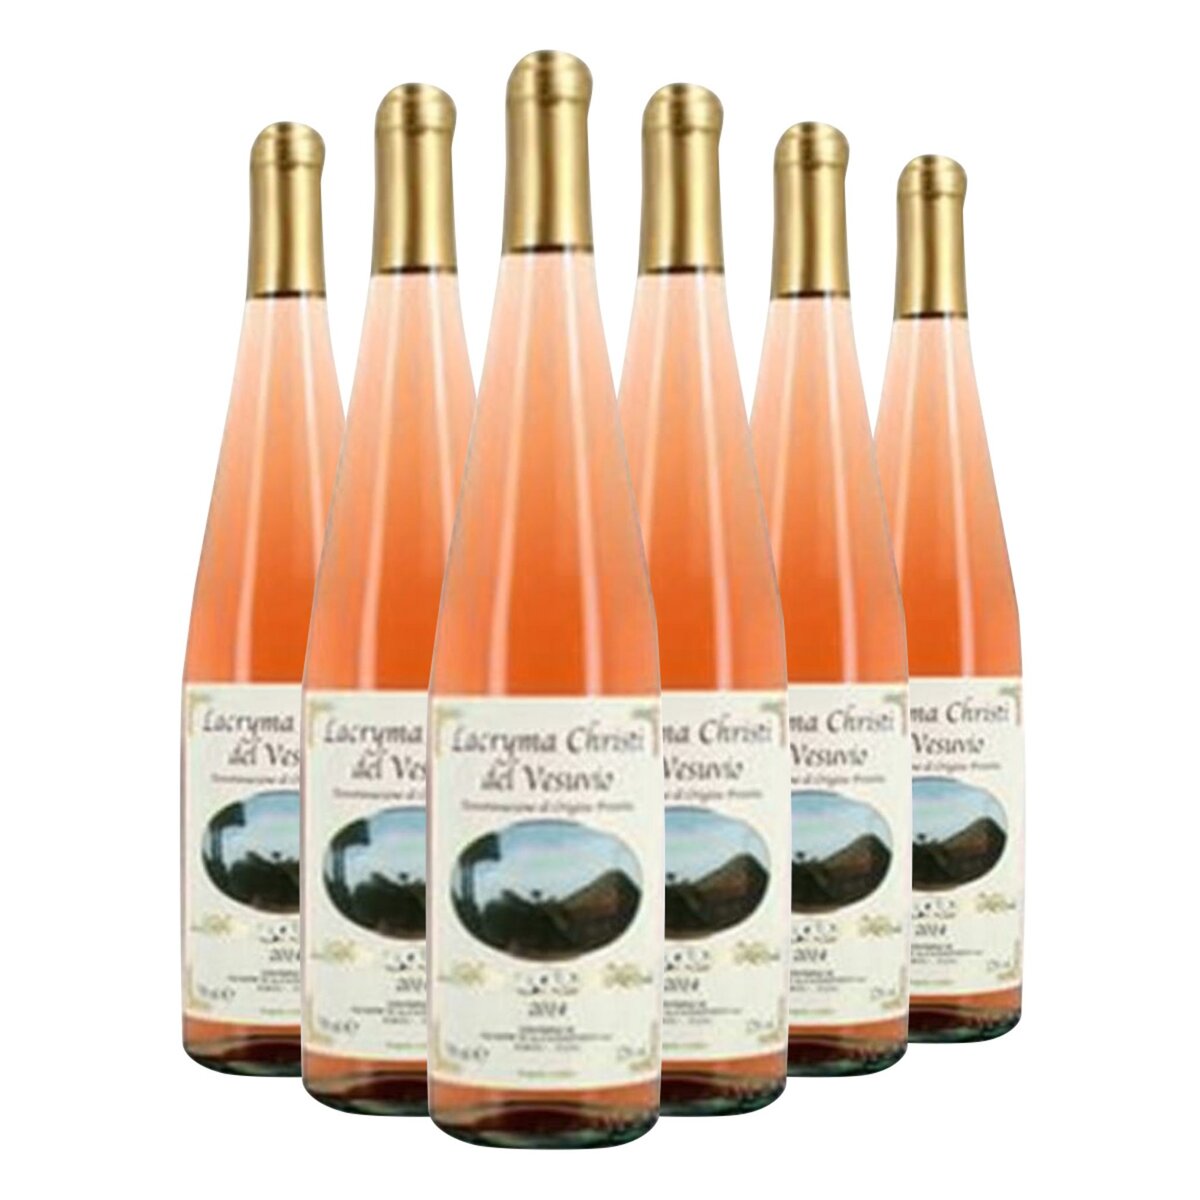 Lot de 6 bouteilles Vesuvio Scala Italie Lacrima Cristi Rosé 2015